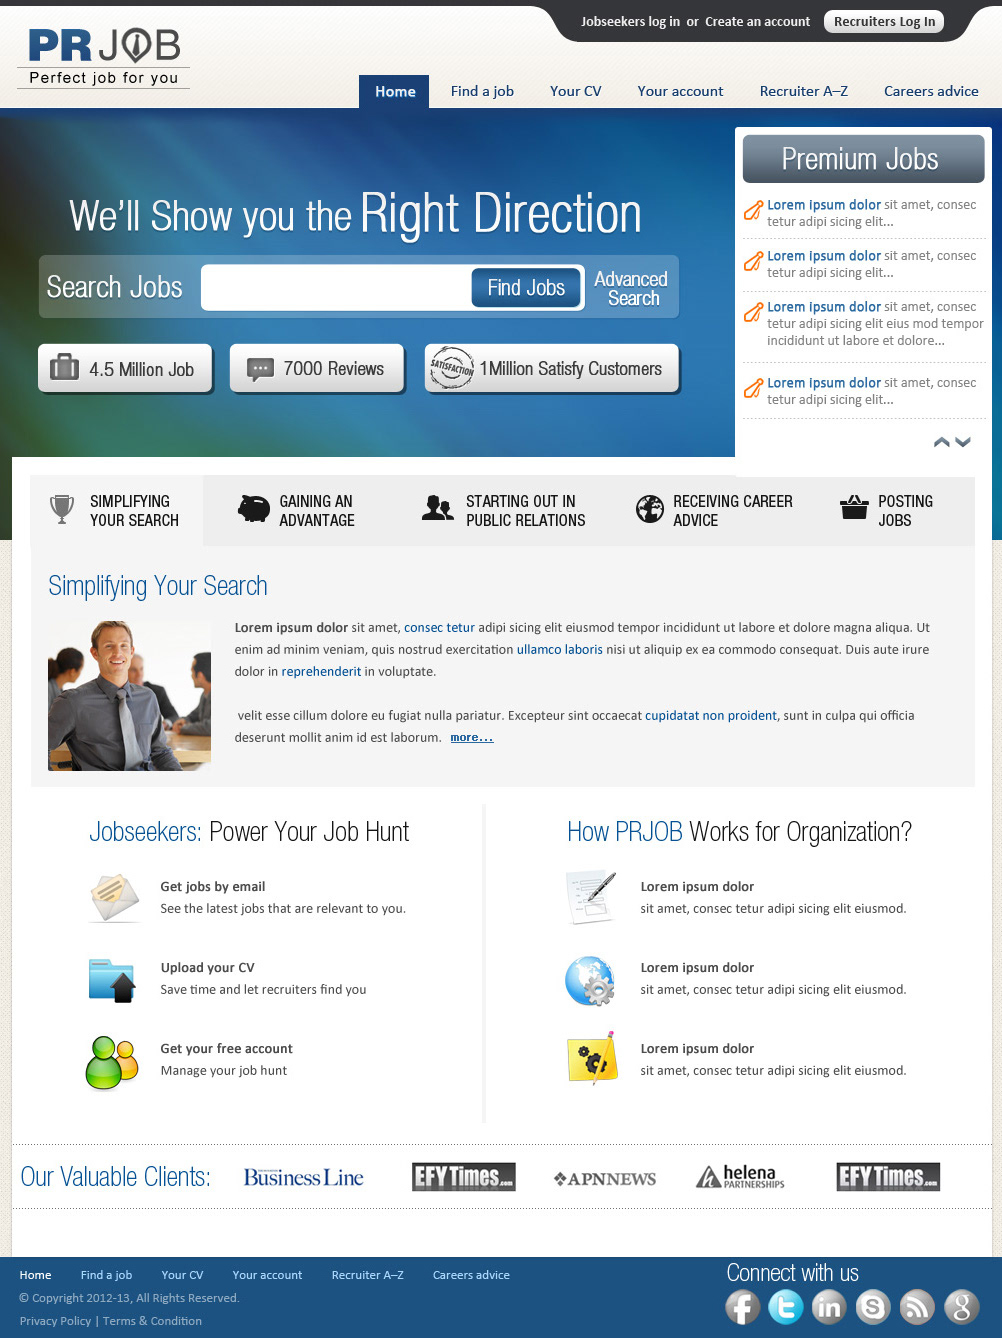 PR Jobs job search engine job search website